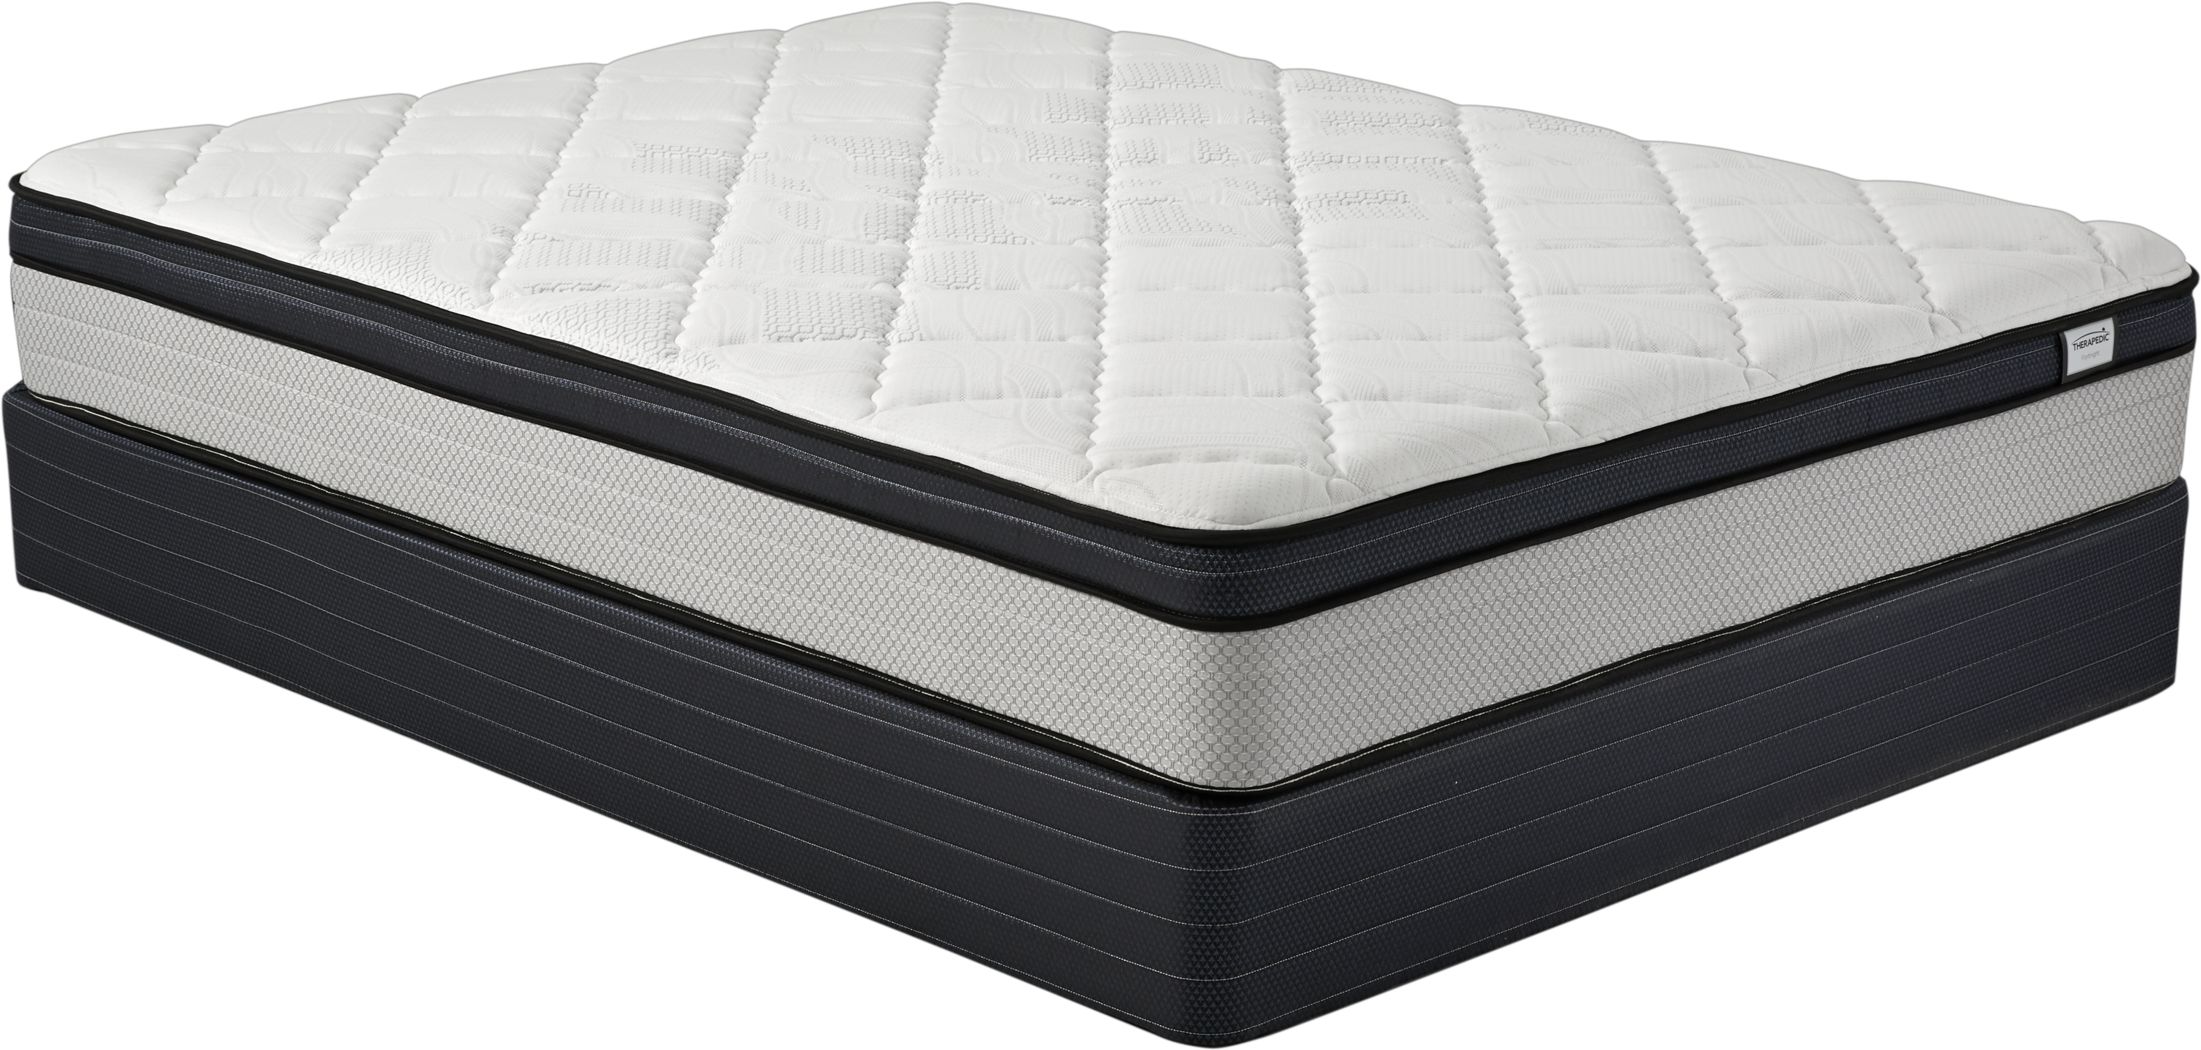 berkley jensen by therapedic queen mattress set